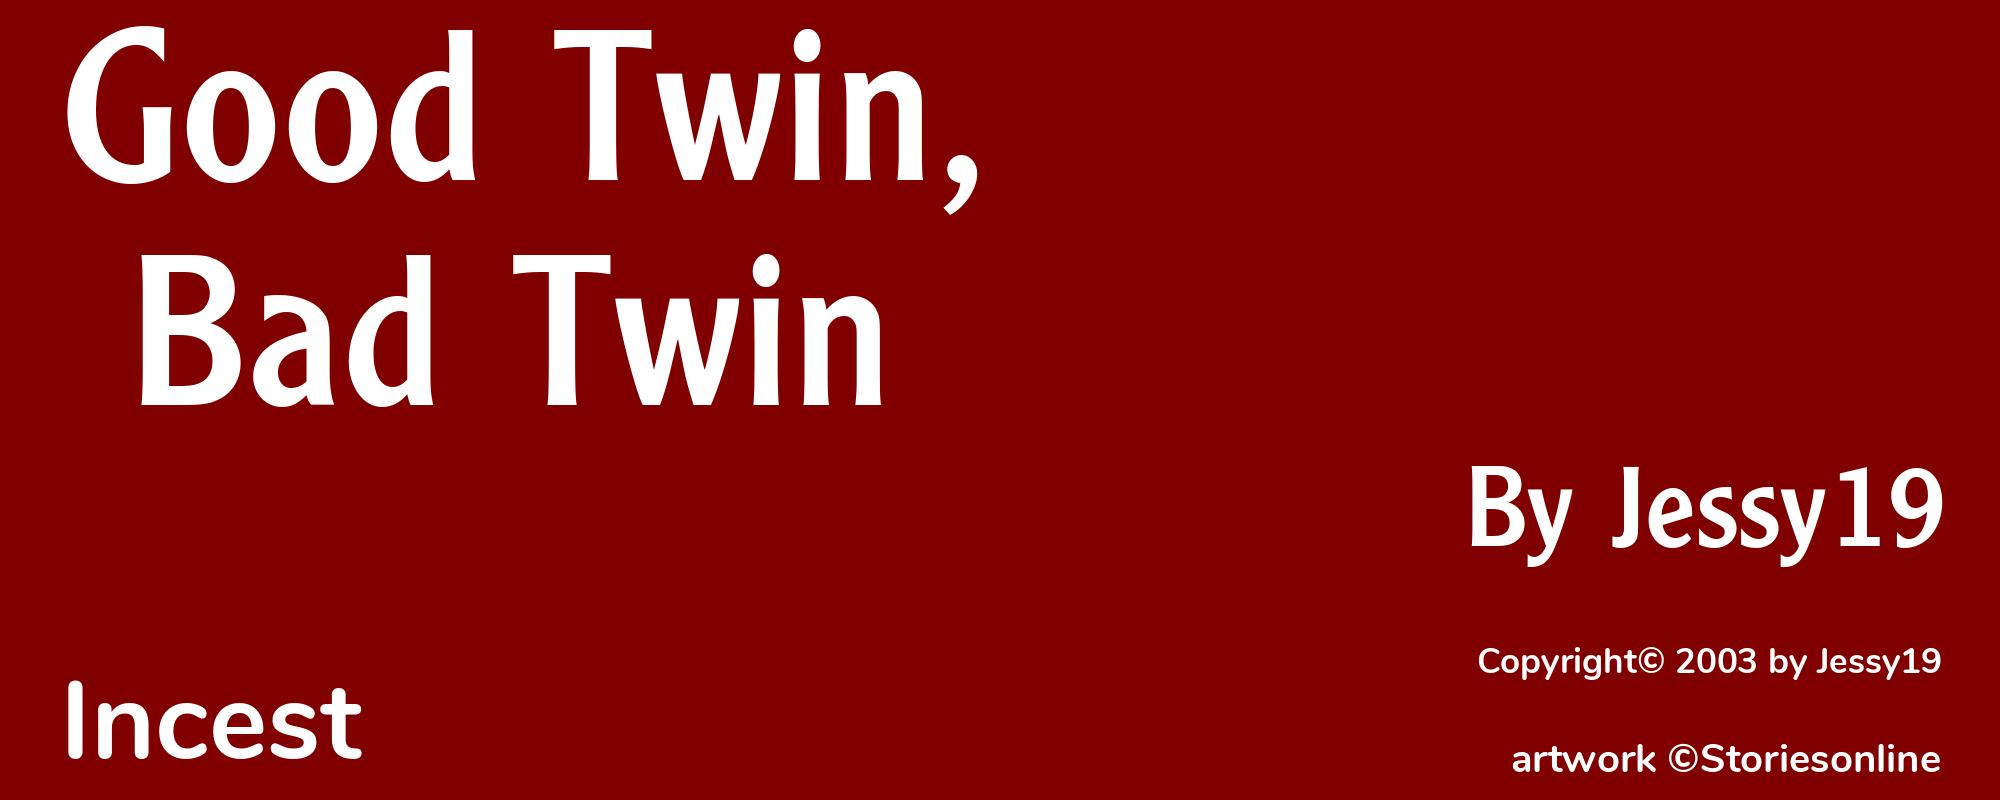 Good Twin, Bad Twin - Cover